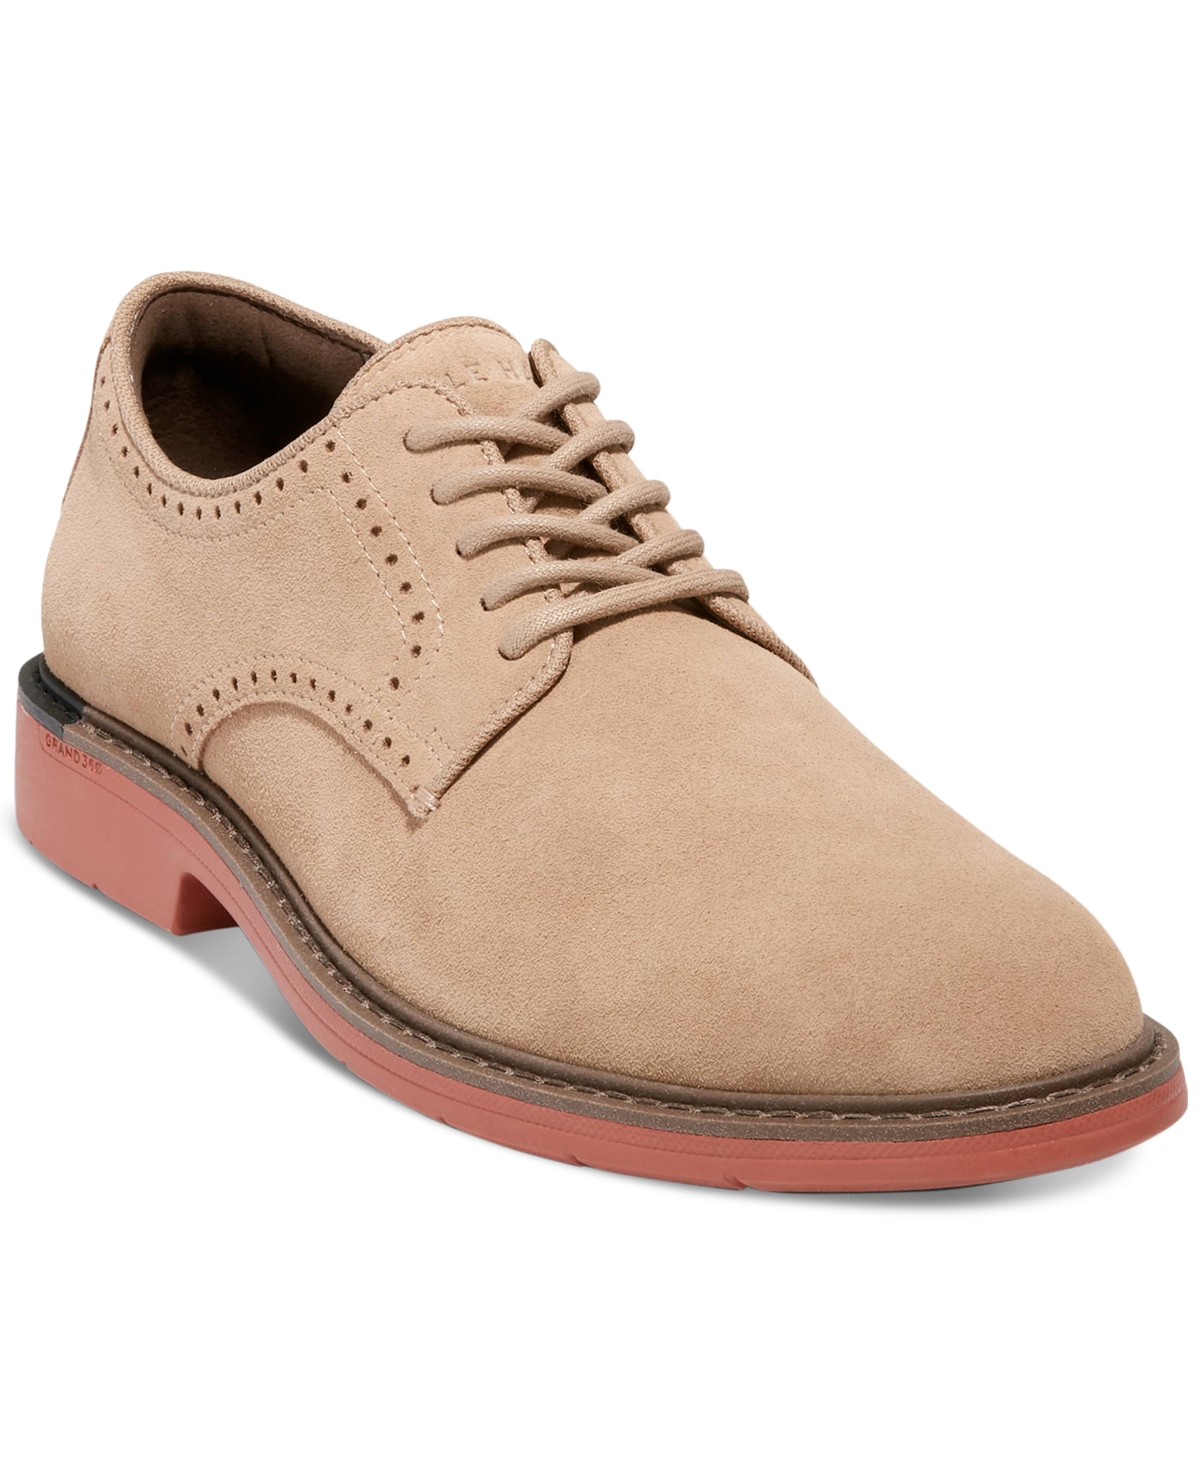 Men's The Go-To Plain-Toe Oxford Dress Shoe - Dark Latte Suede/Redwood